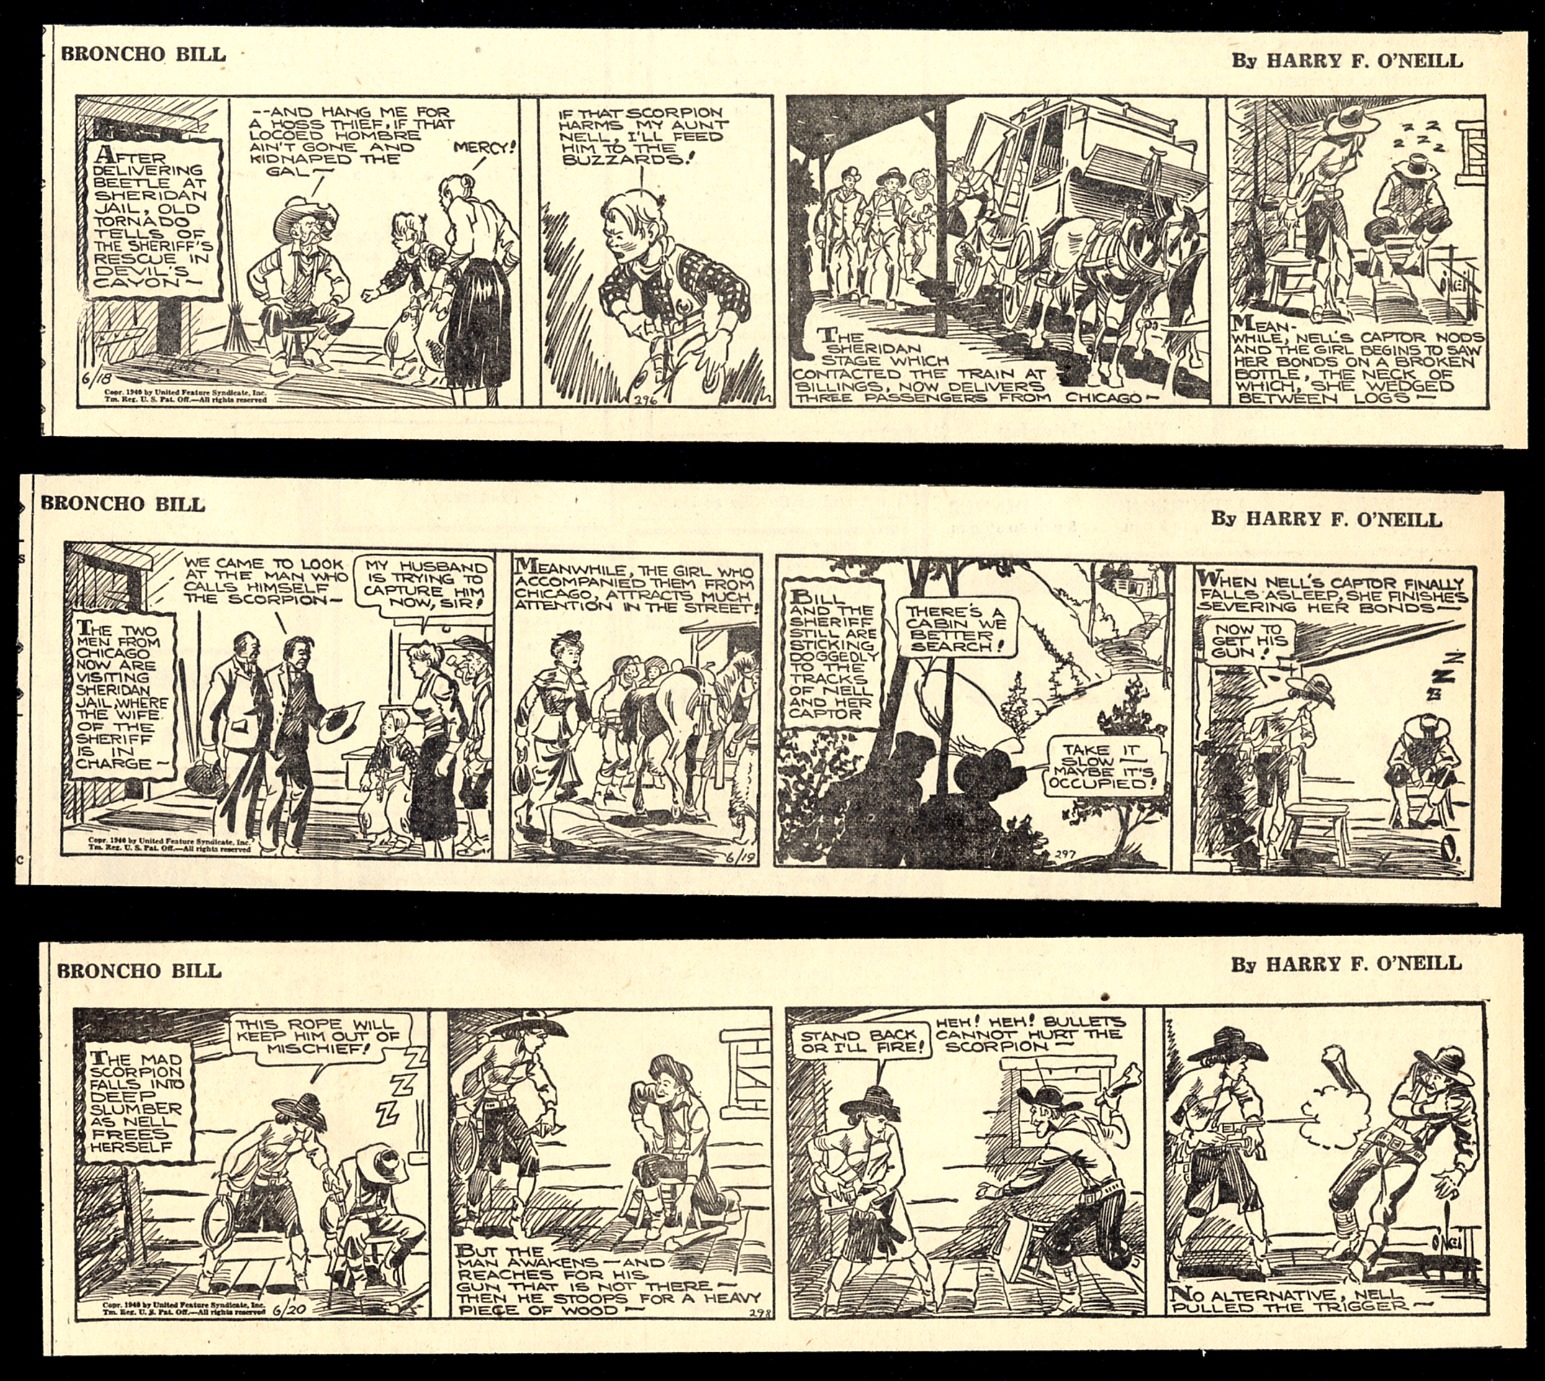 BRONCHO BILL (1940) - 306 Daily Comics - by HARRY F. O'NEILL | eBay